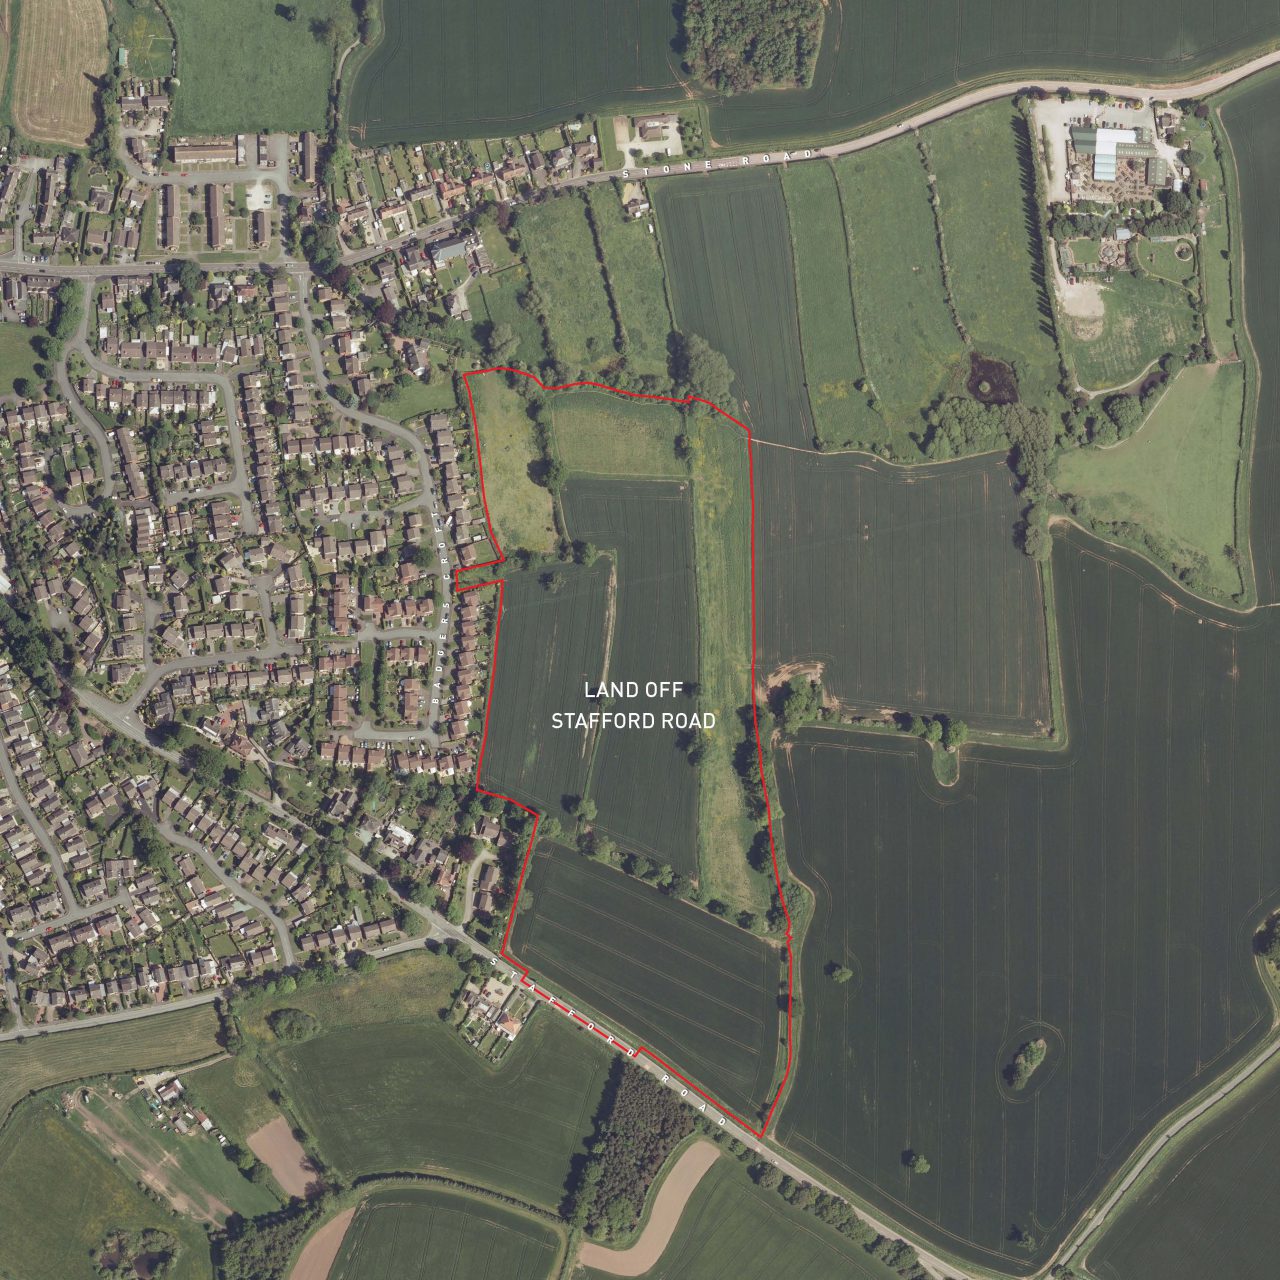 Eccleshall aerial land development plan